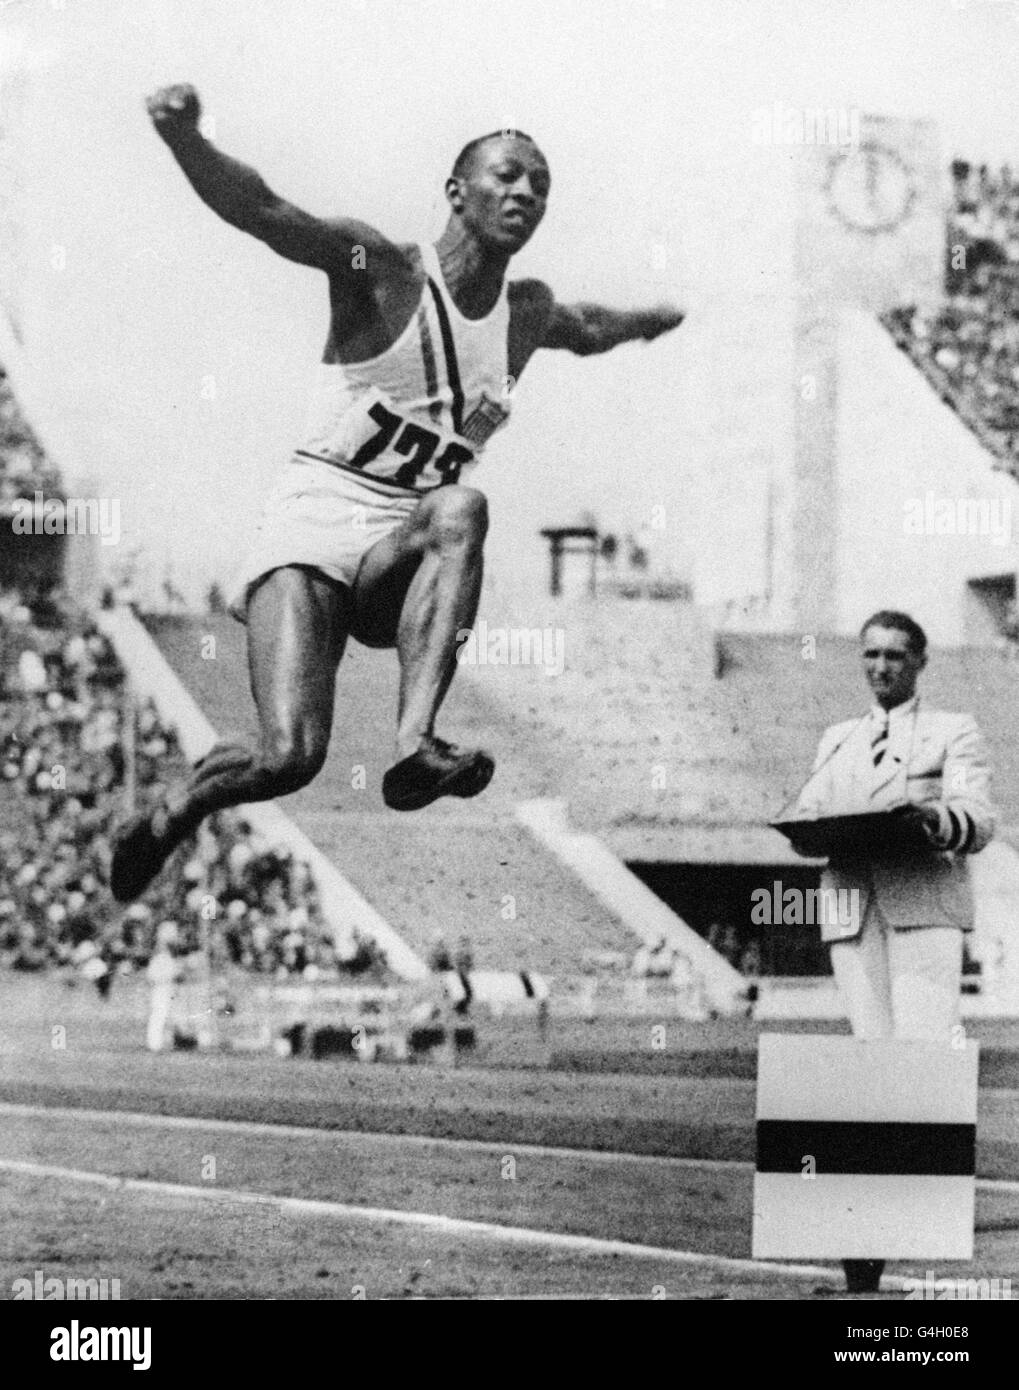 Athletics - Olympic Games Berlin - Men's Long Jump. Jesse Owens, USA, wins the Long Jump. Stock Photo